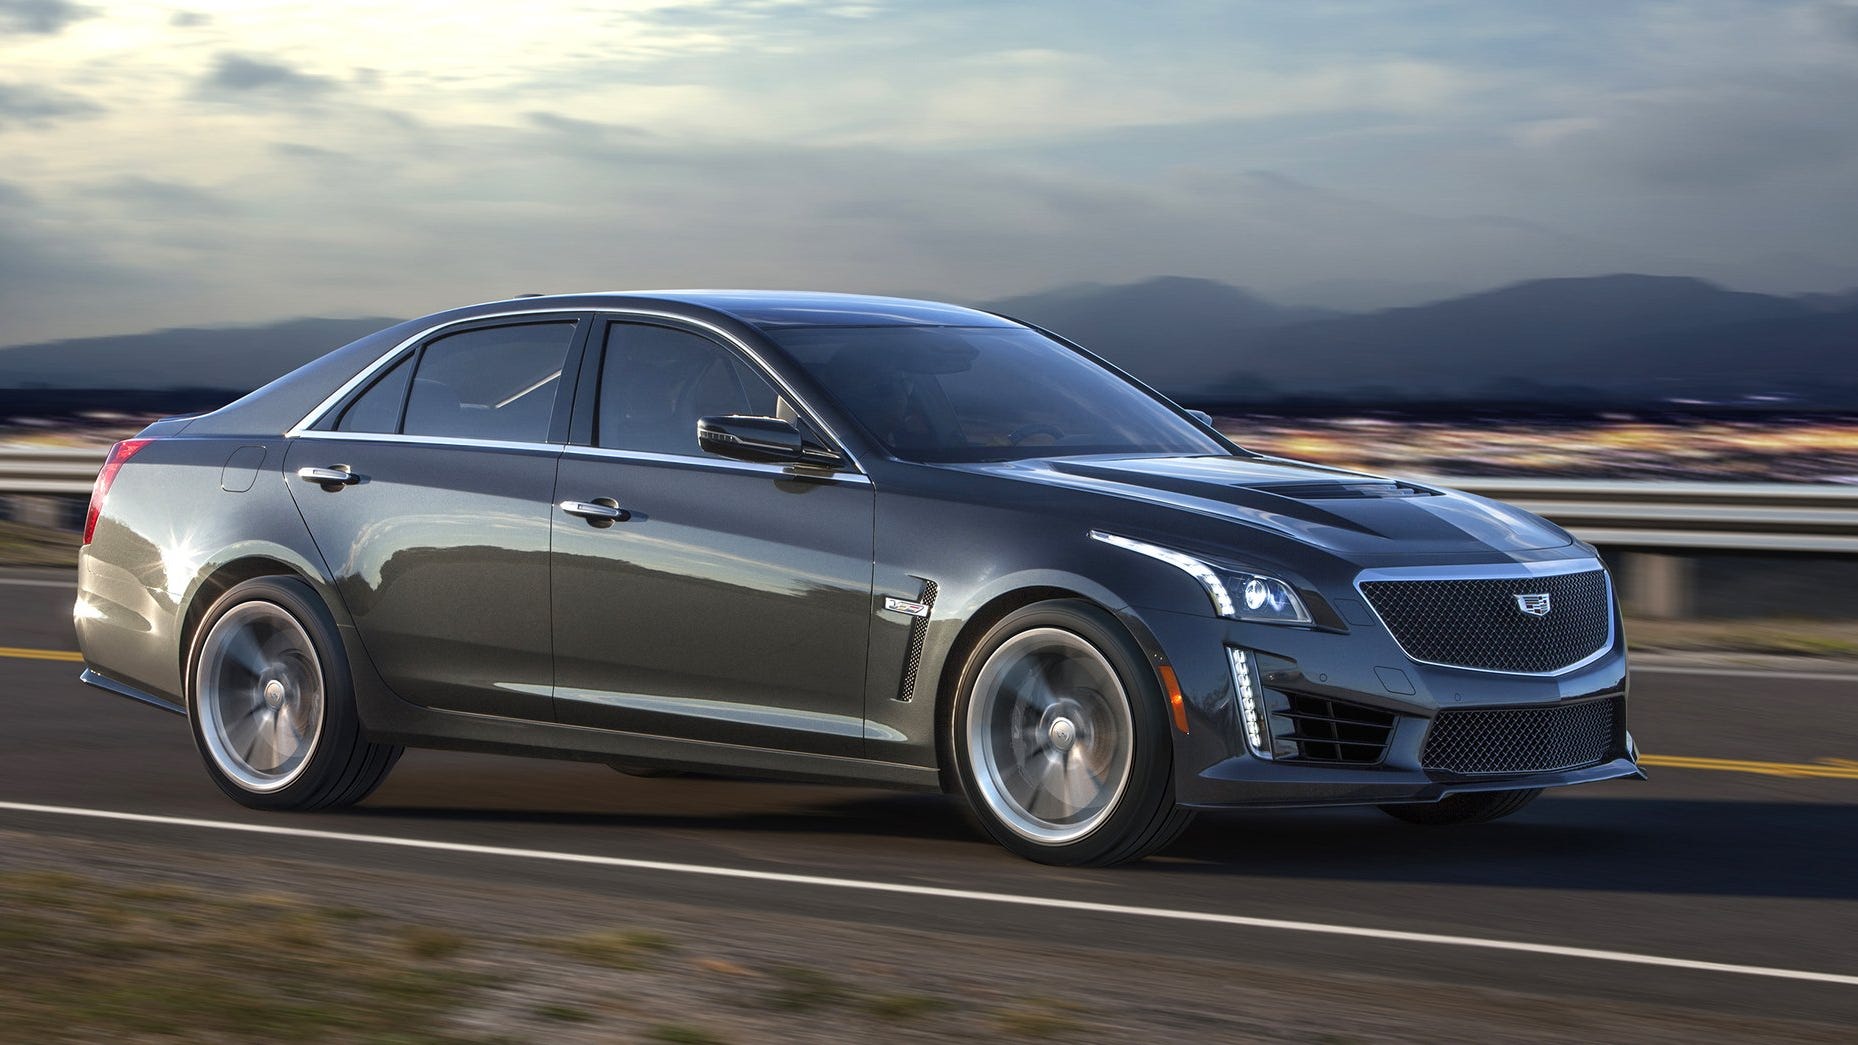 Cadillac's supercharged CTS-V boasts 640 horsepower